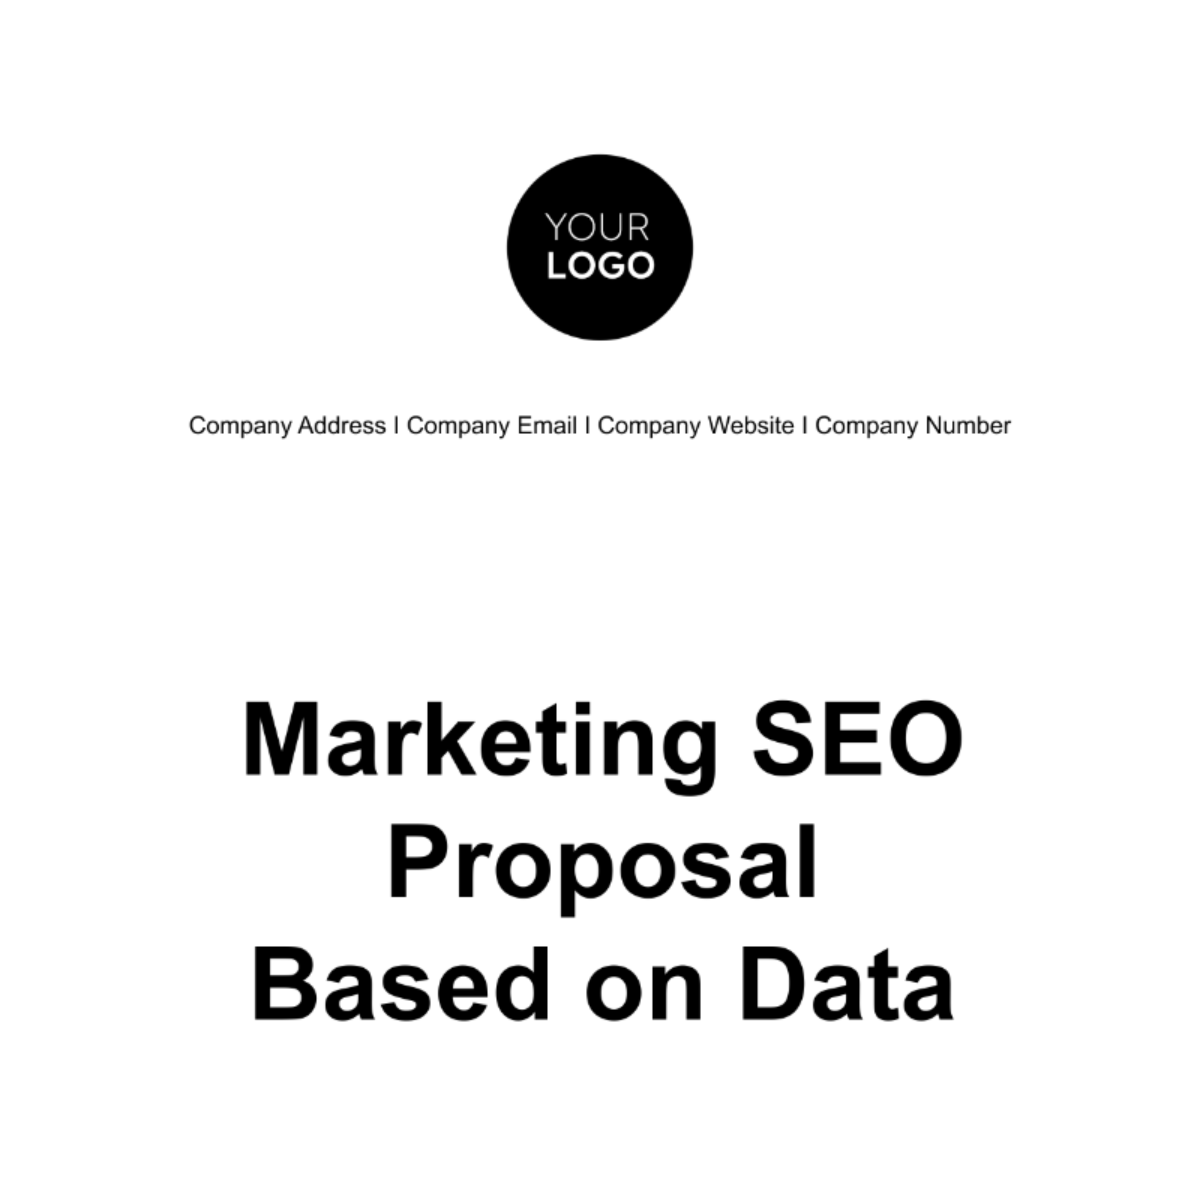 Marketing SEO Proposal Based on Data Template